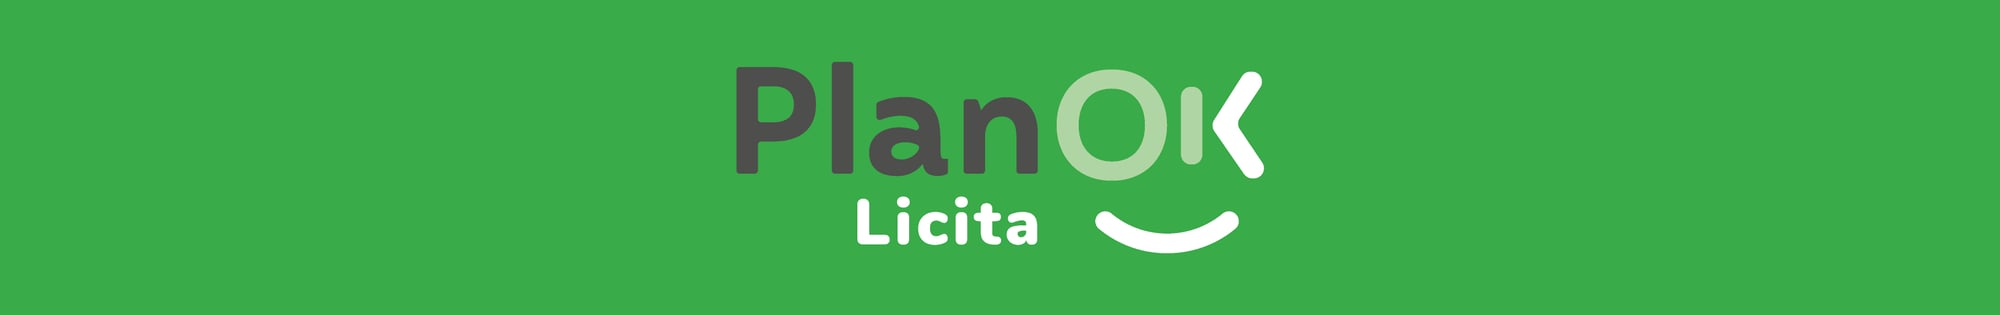 banner-sistema-licita